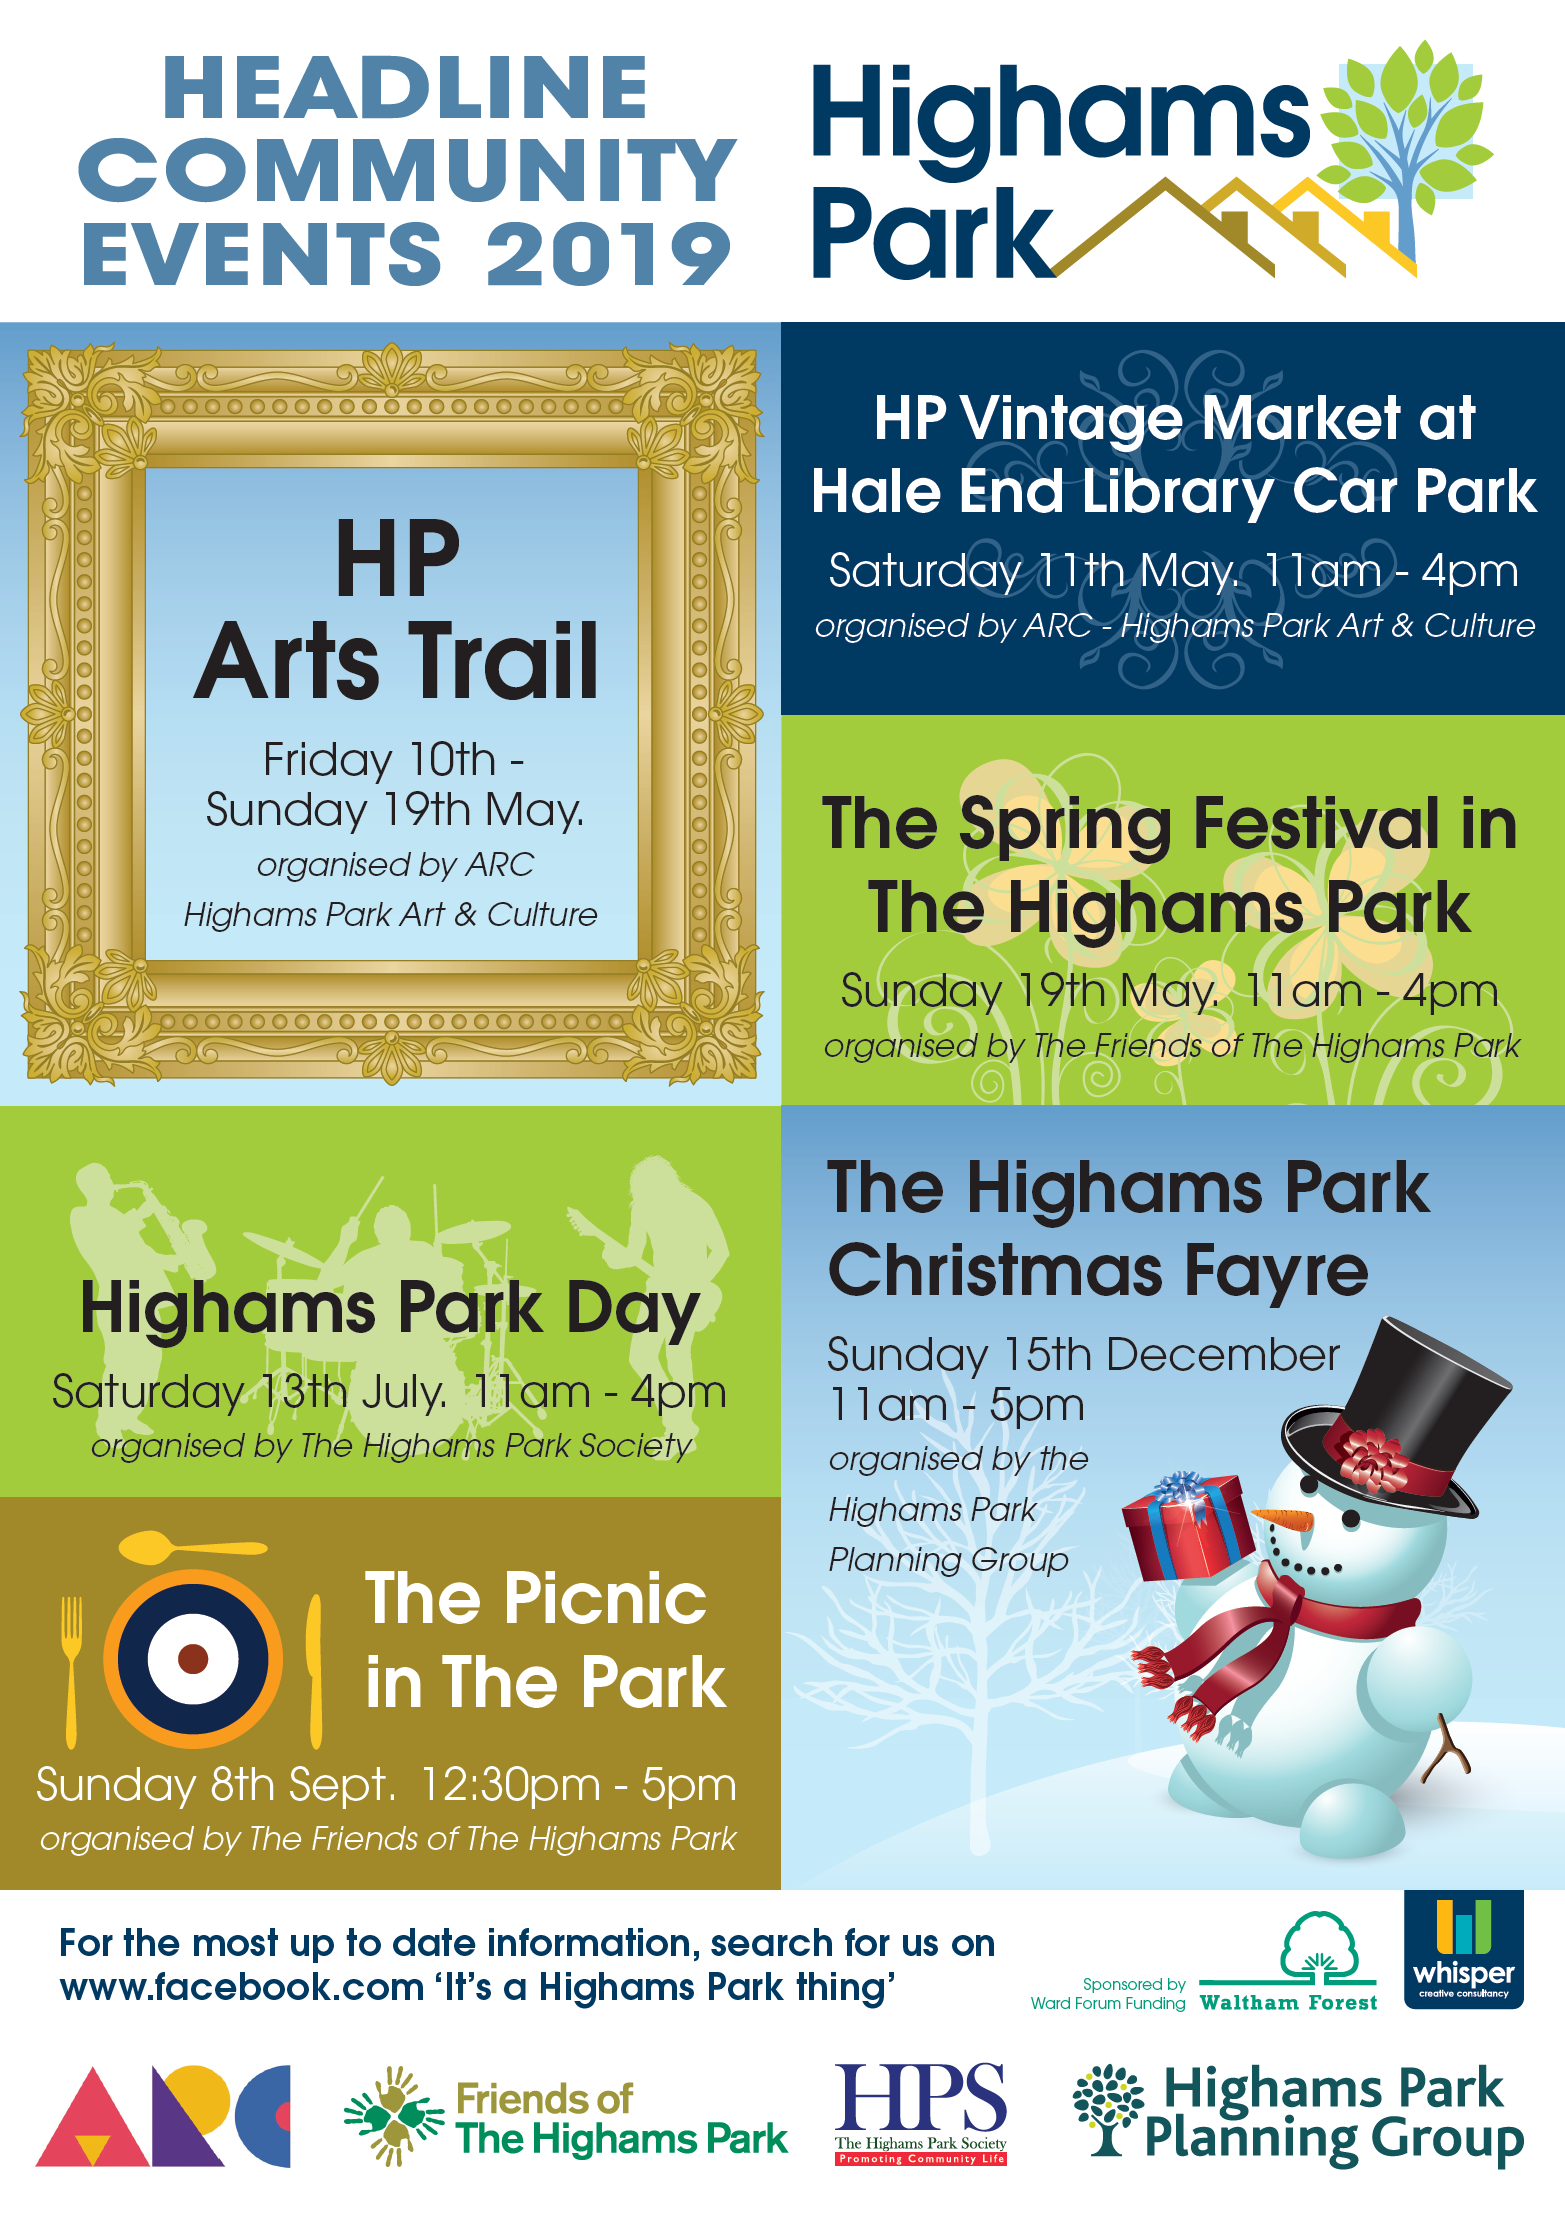 Headline Community Events in Highams Park in 2019